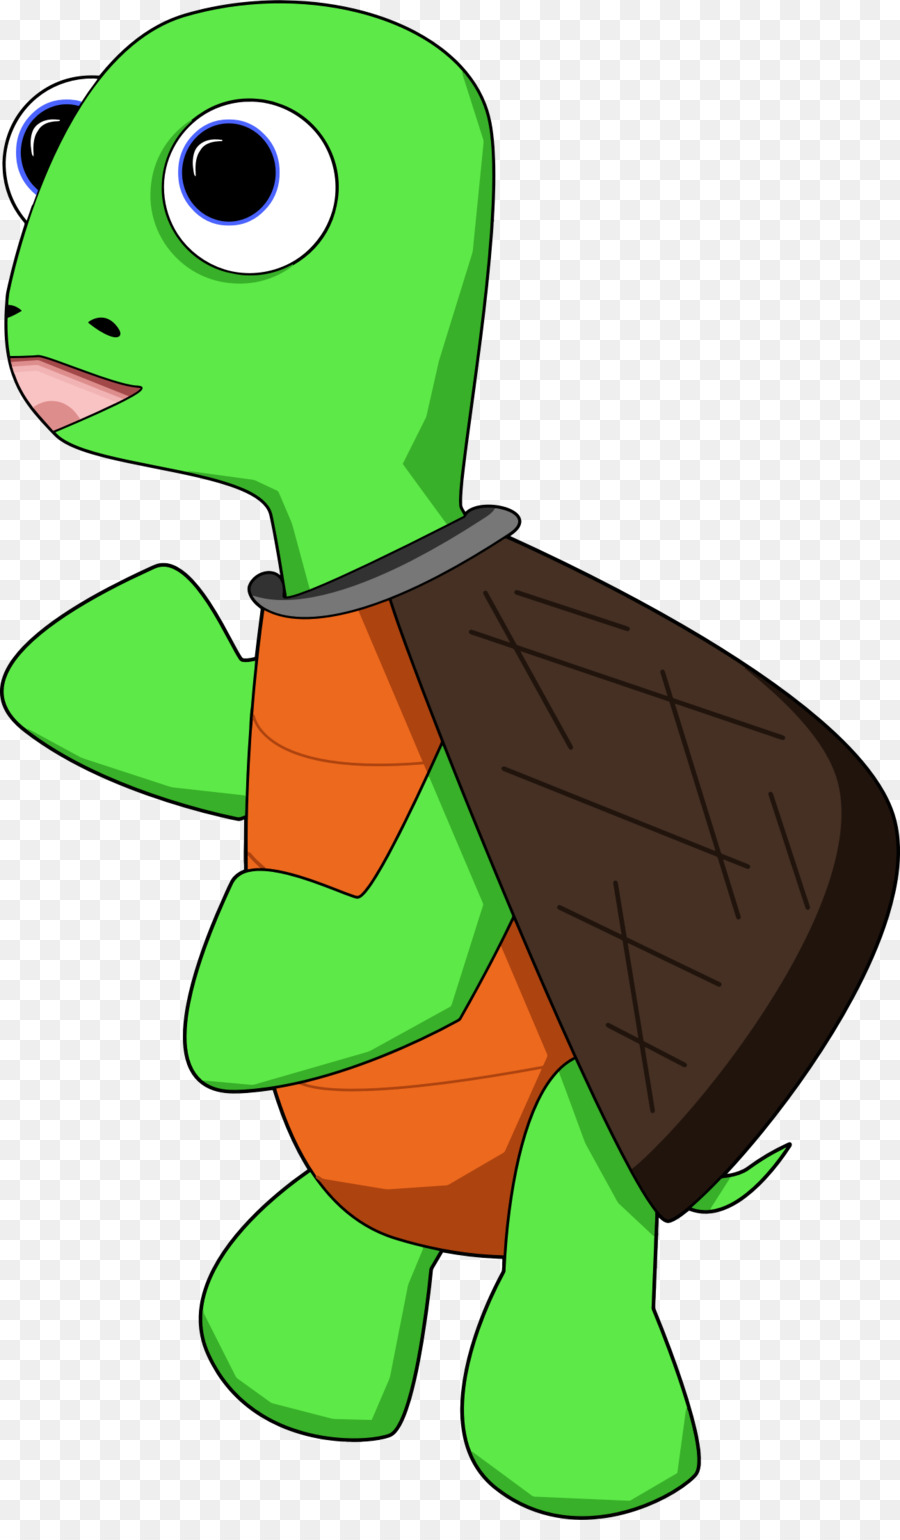 Turtle Reptile Cartoon Tortoise Clip art - turtle png download - 1294*2186 - Free Transparent Turtle png Download.